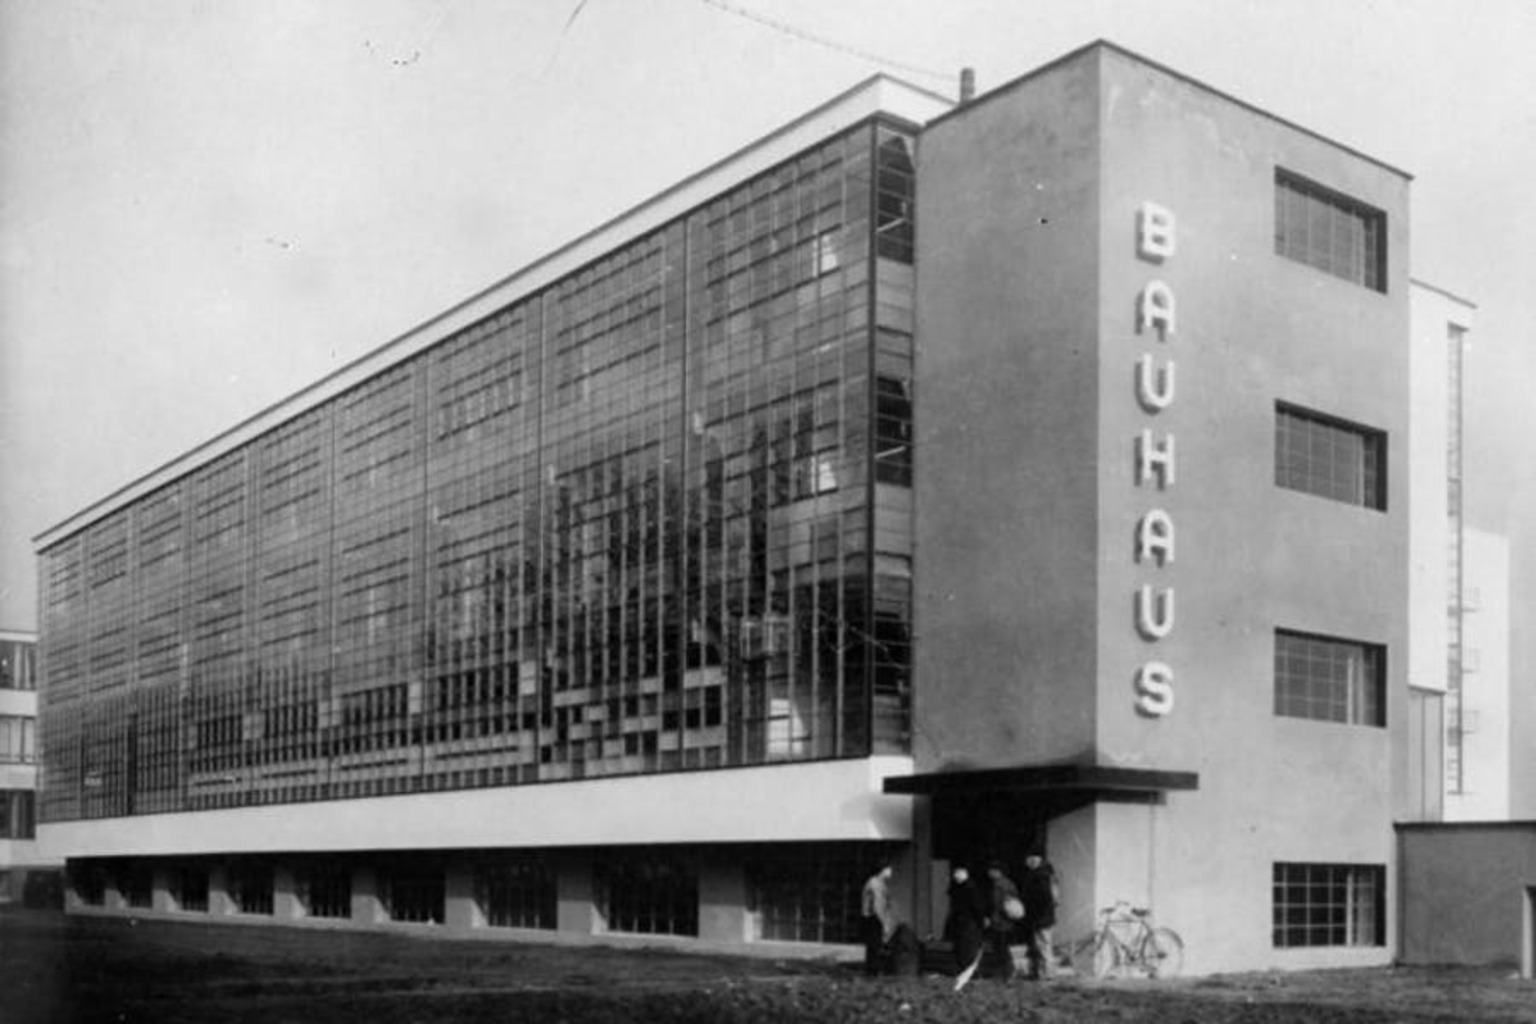 Bauhaus Stairways, Oskar Schlemmer 1932.